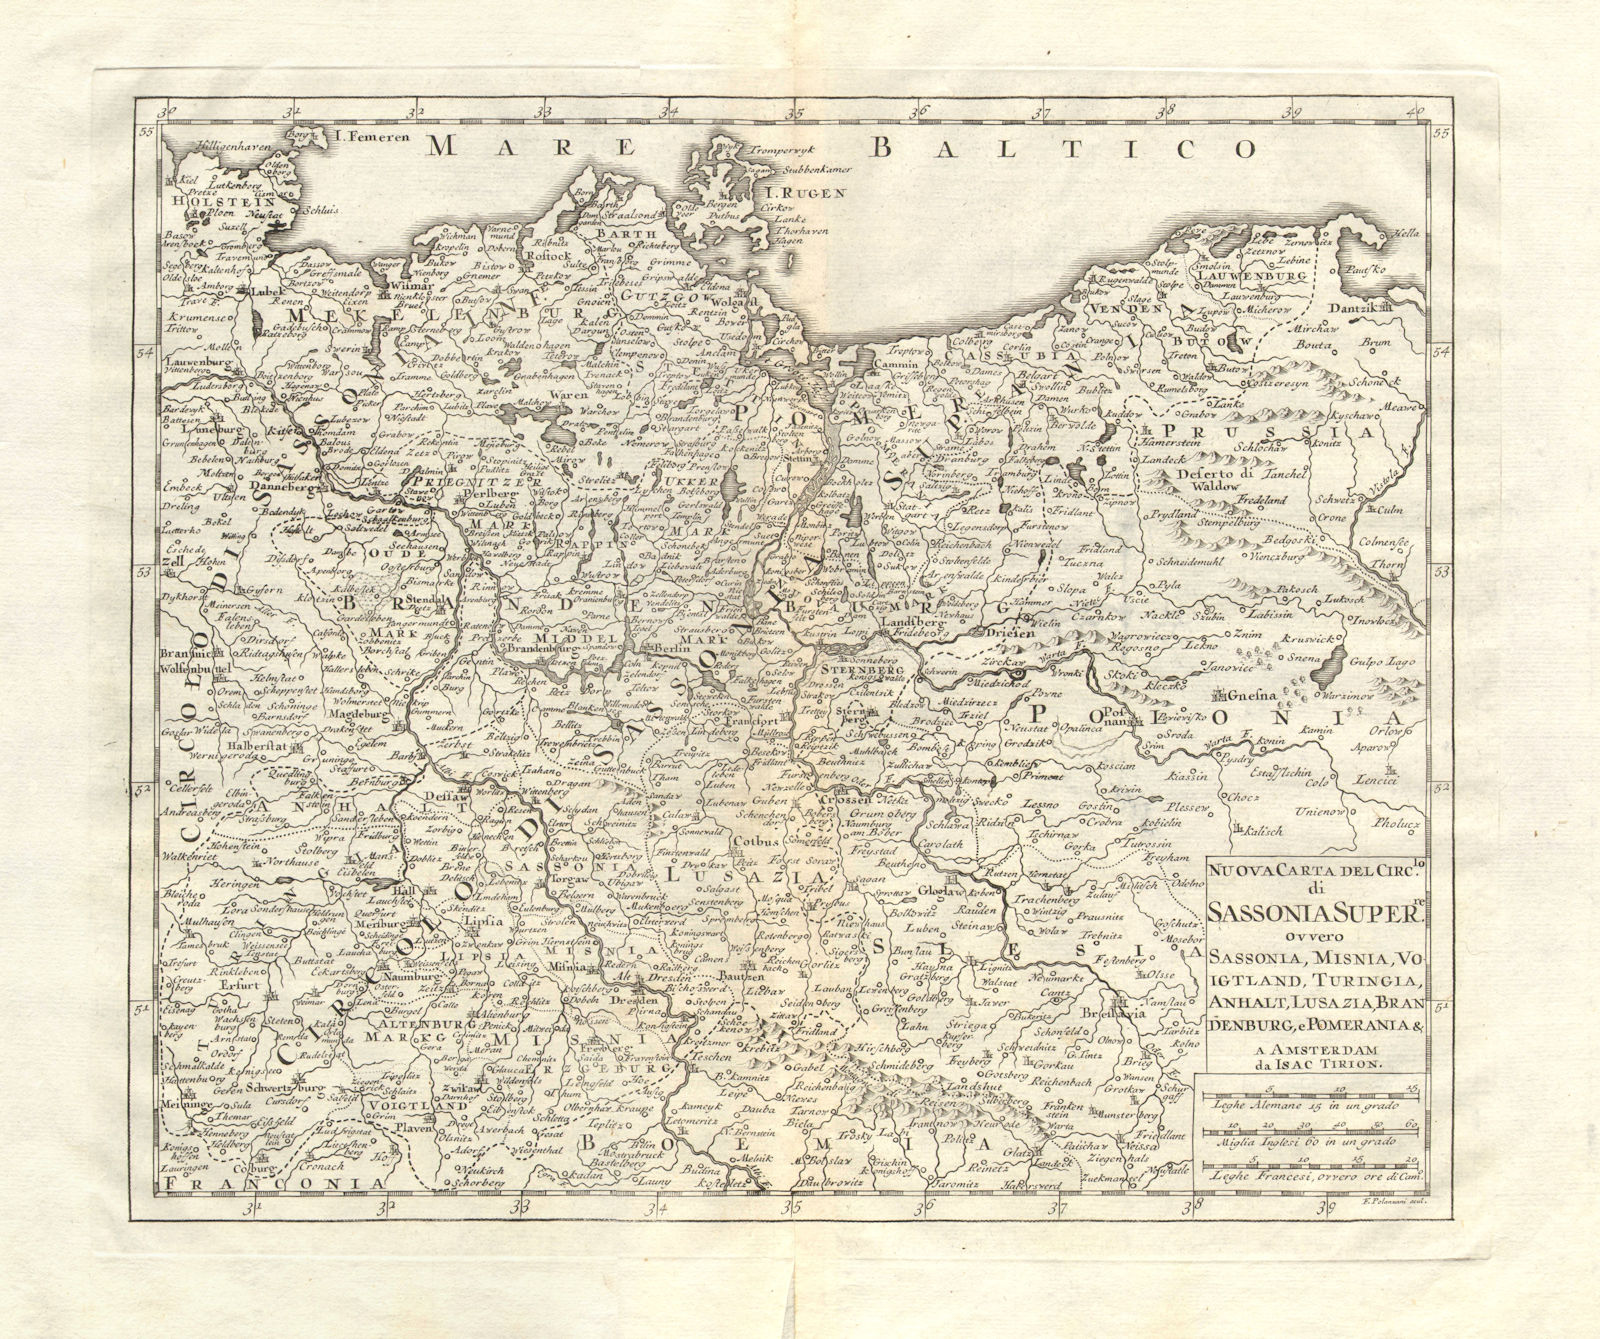 Associate Product 'Nuova Carta del Circolo di Sassonia Superiore' by Isaak TIRION 1740 old map